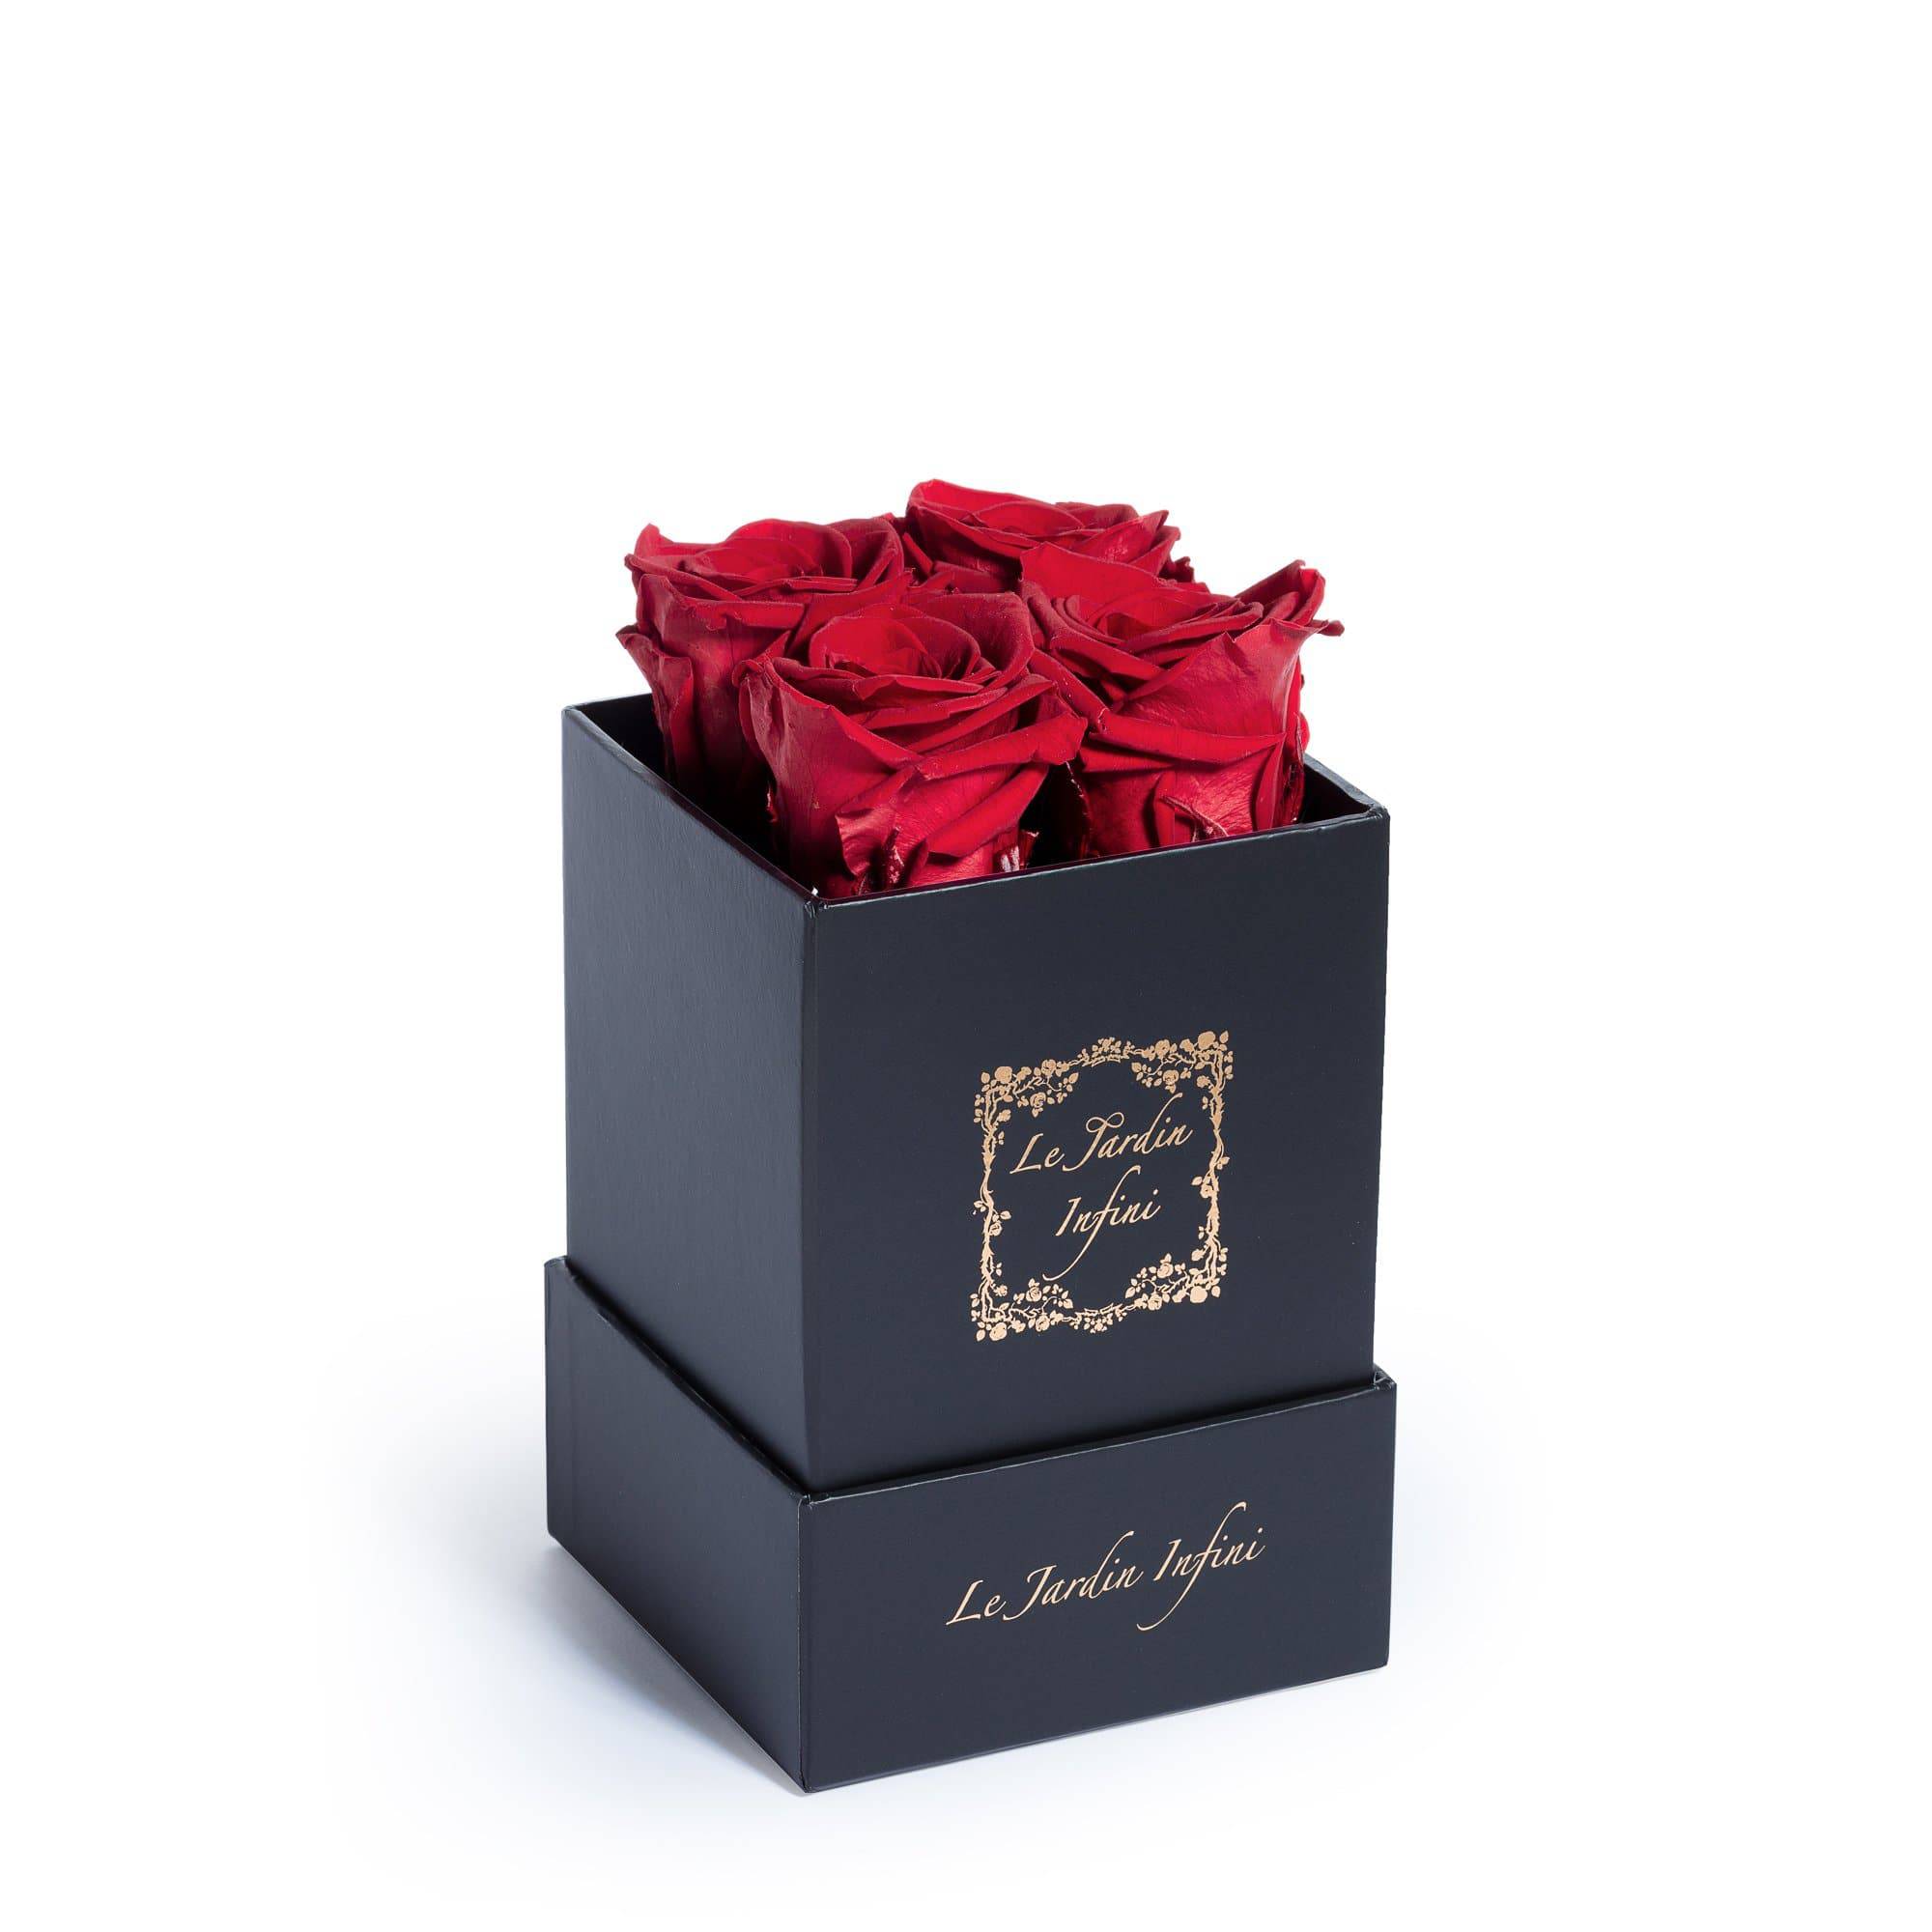 Burgundy Preserved Roses - Small Square Black Box - Le Jardin Infini Roses in a Box